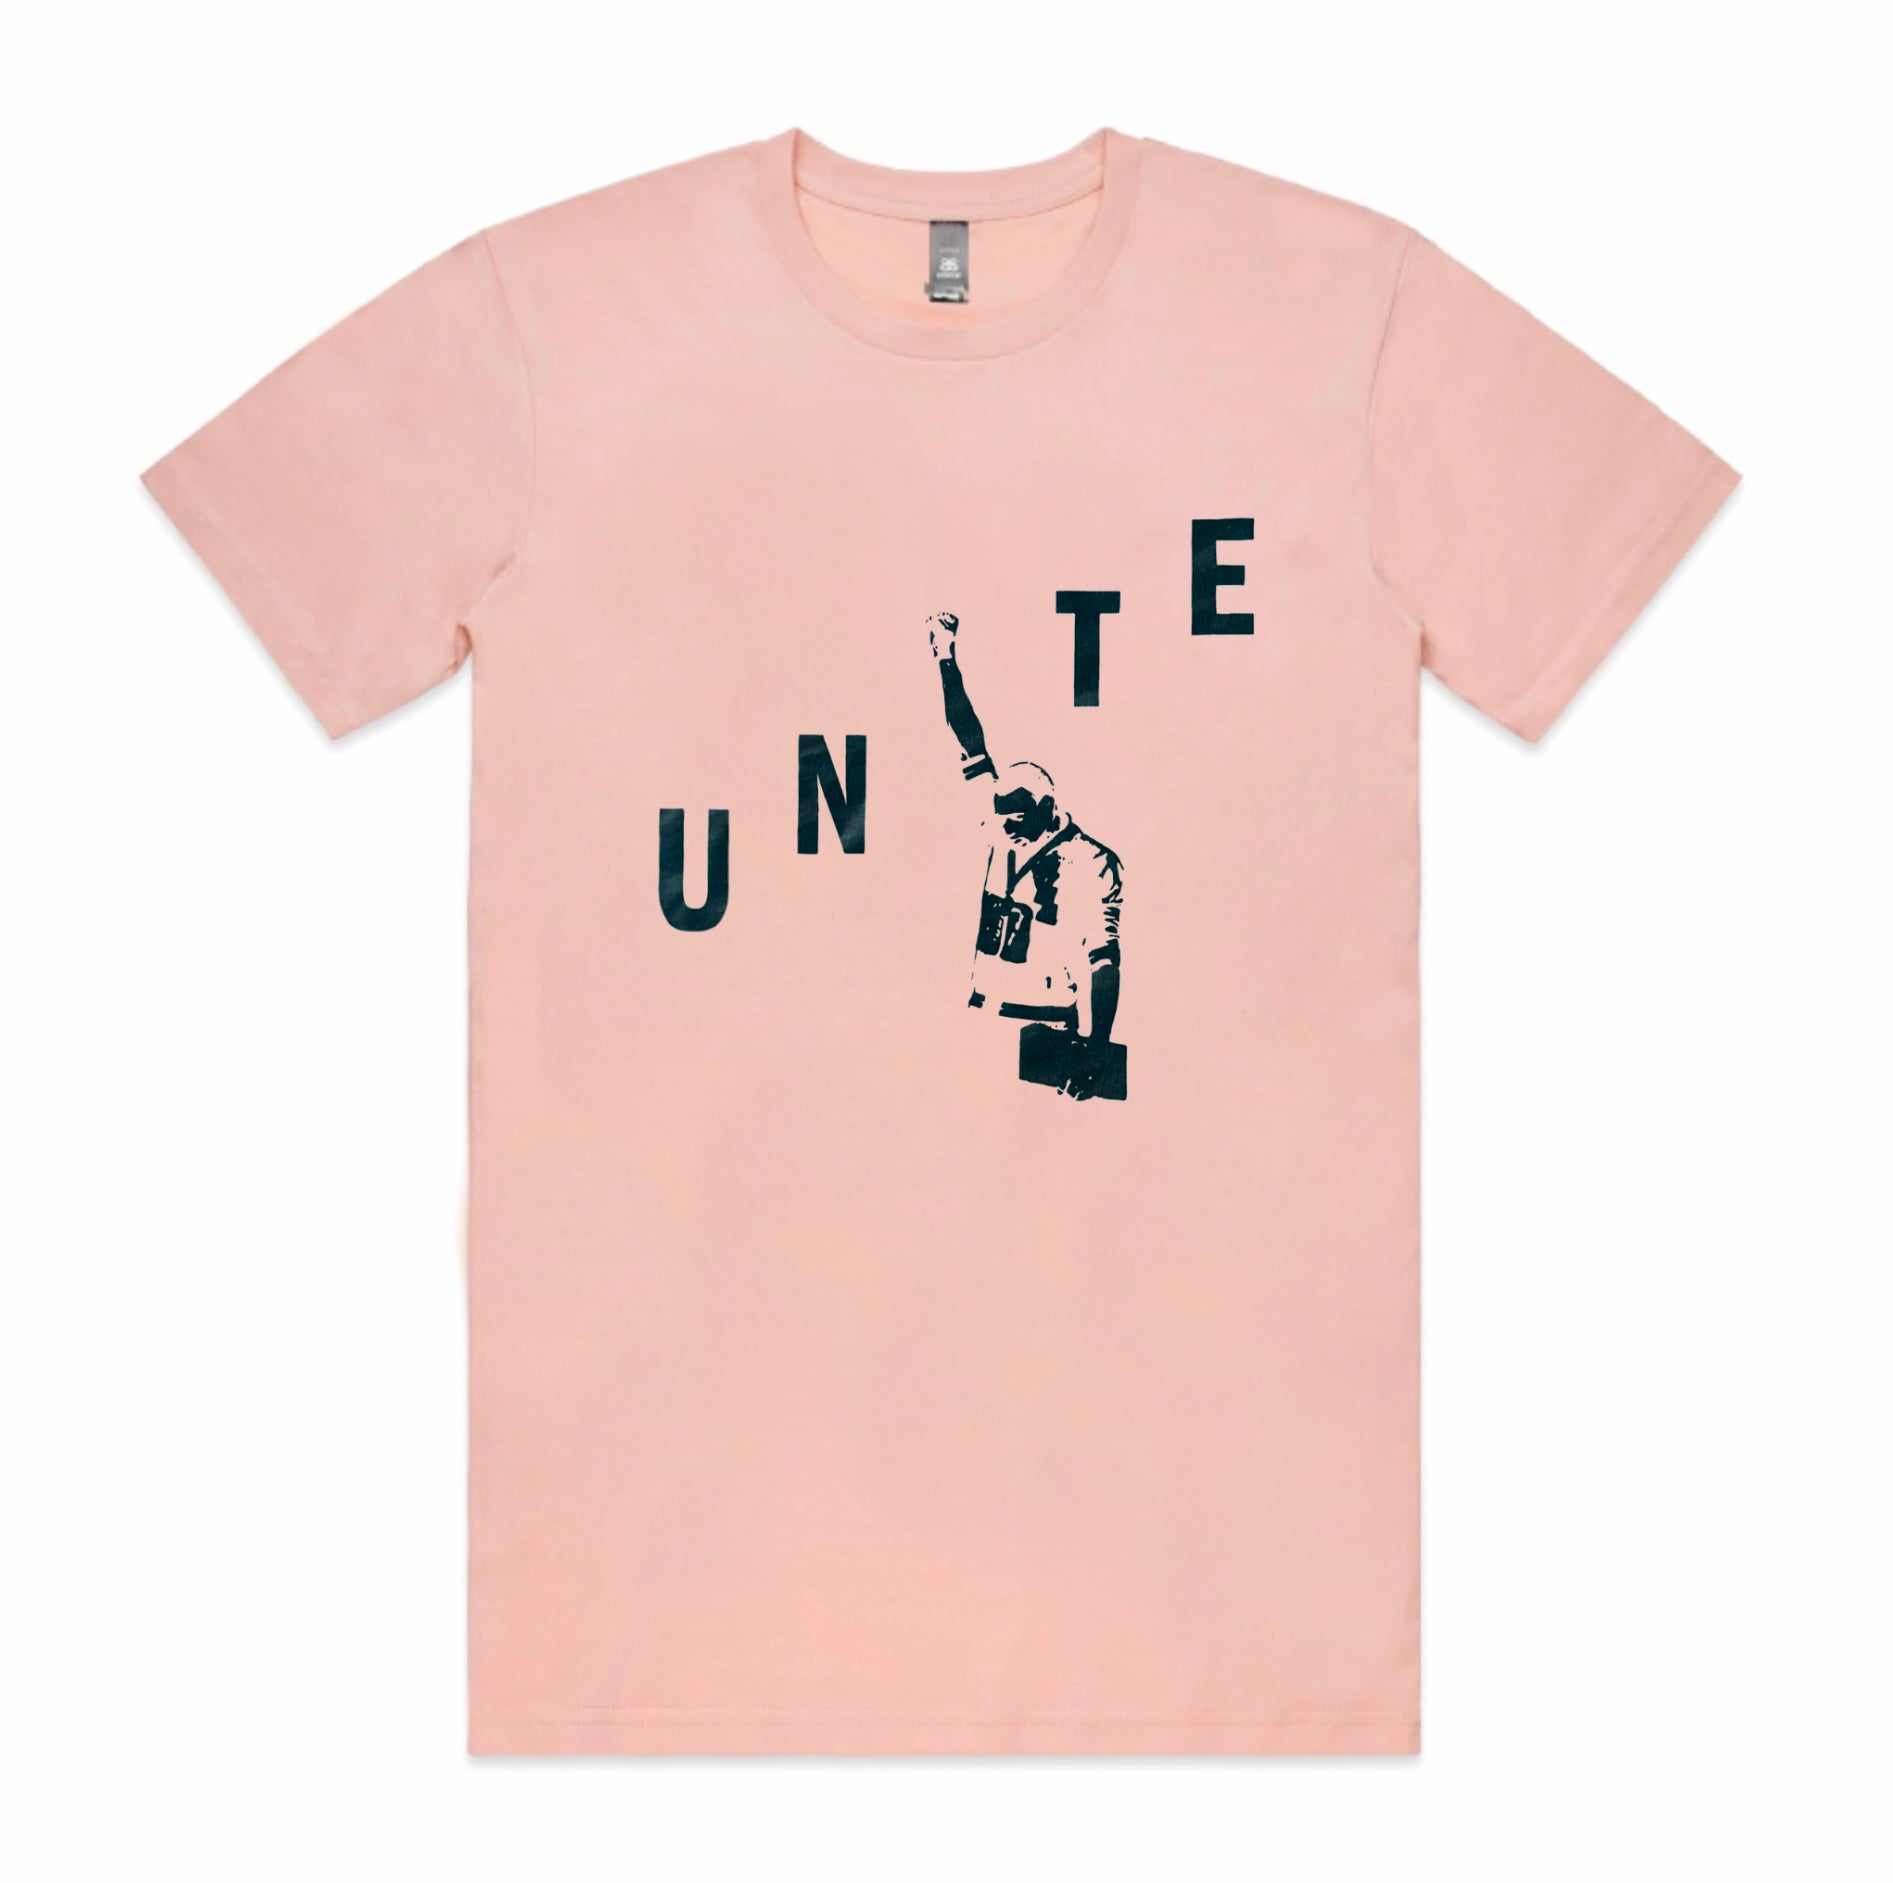 Unite Tee - Pink